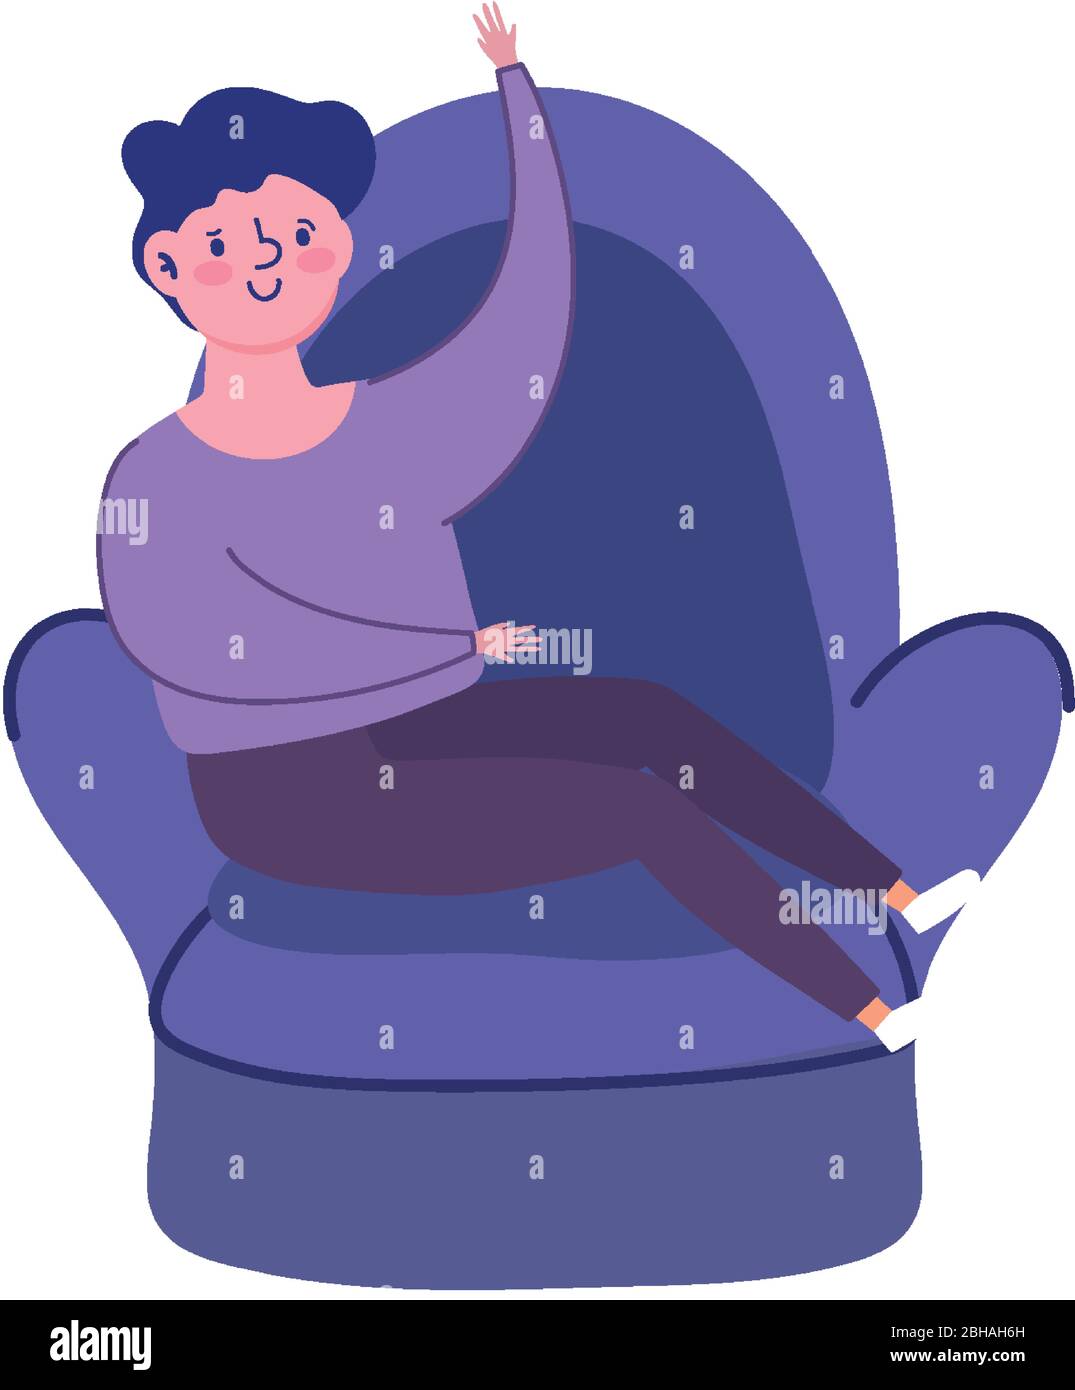 Featured image of post Purple Chair Cartoon / Angry woman purple hair pop art drinking coffee.